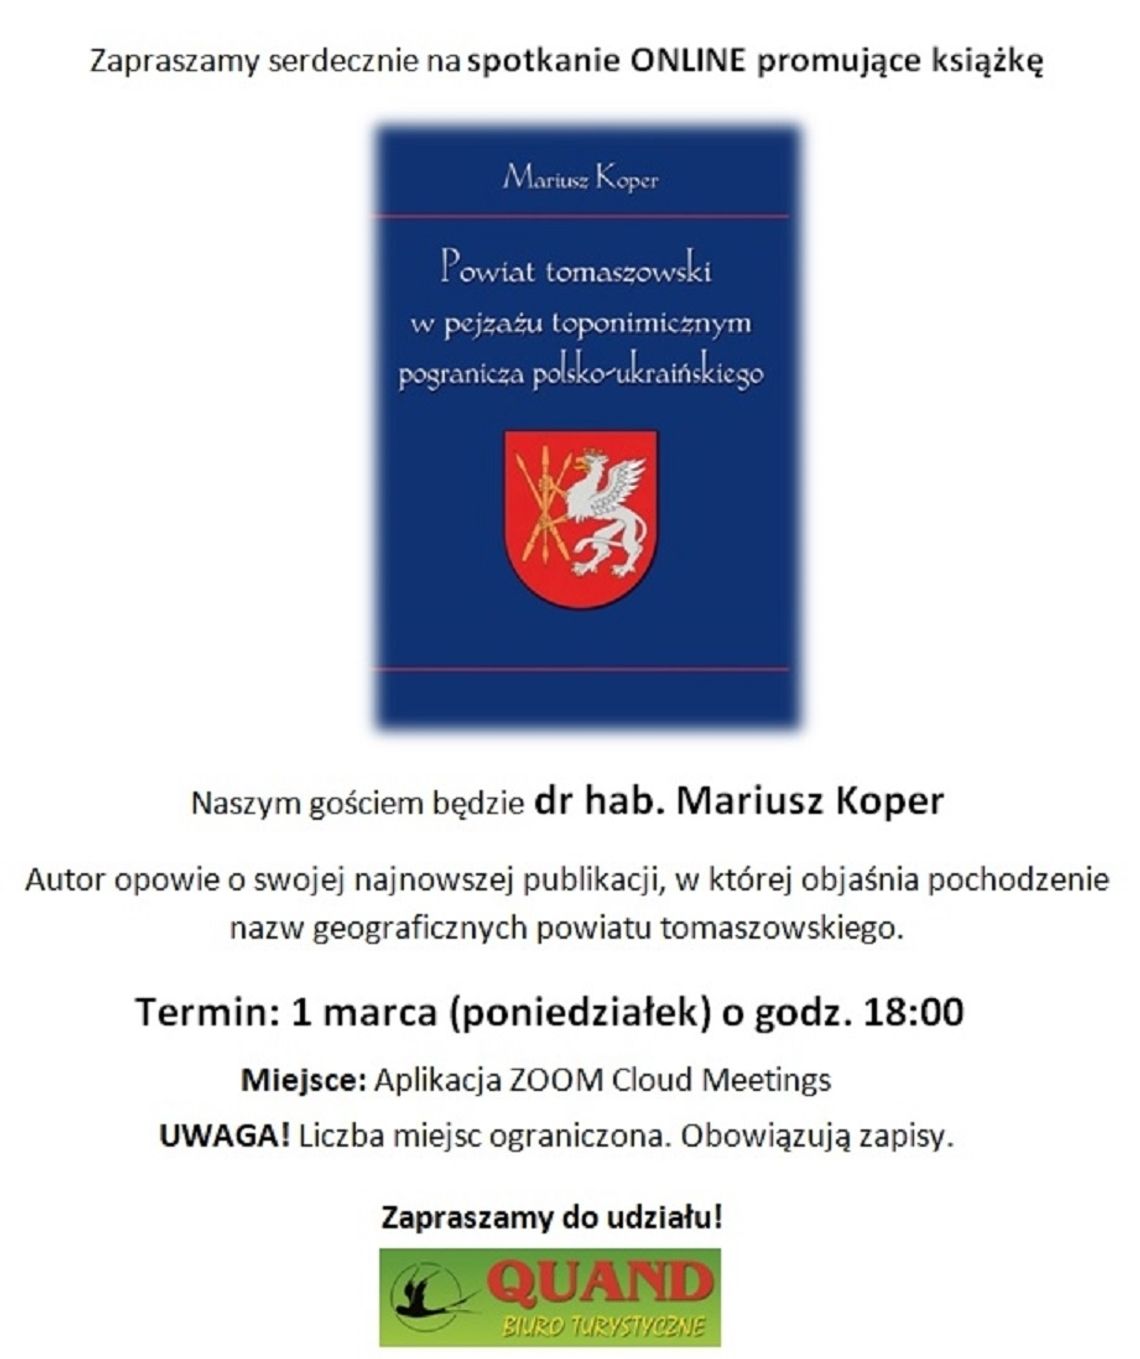 Promocja książki Mariusza Kopra online